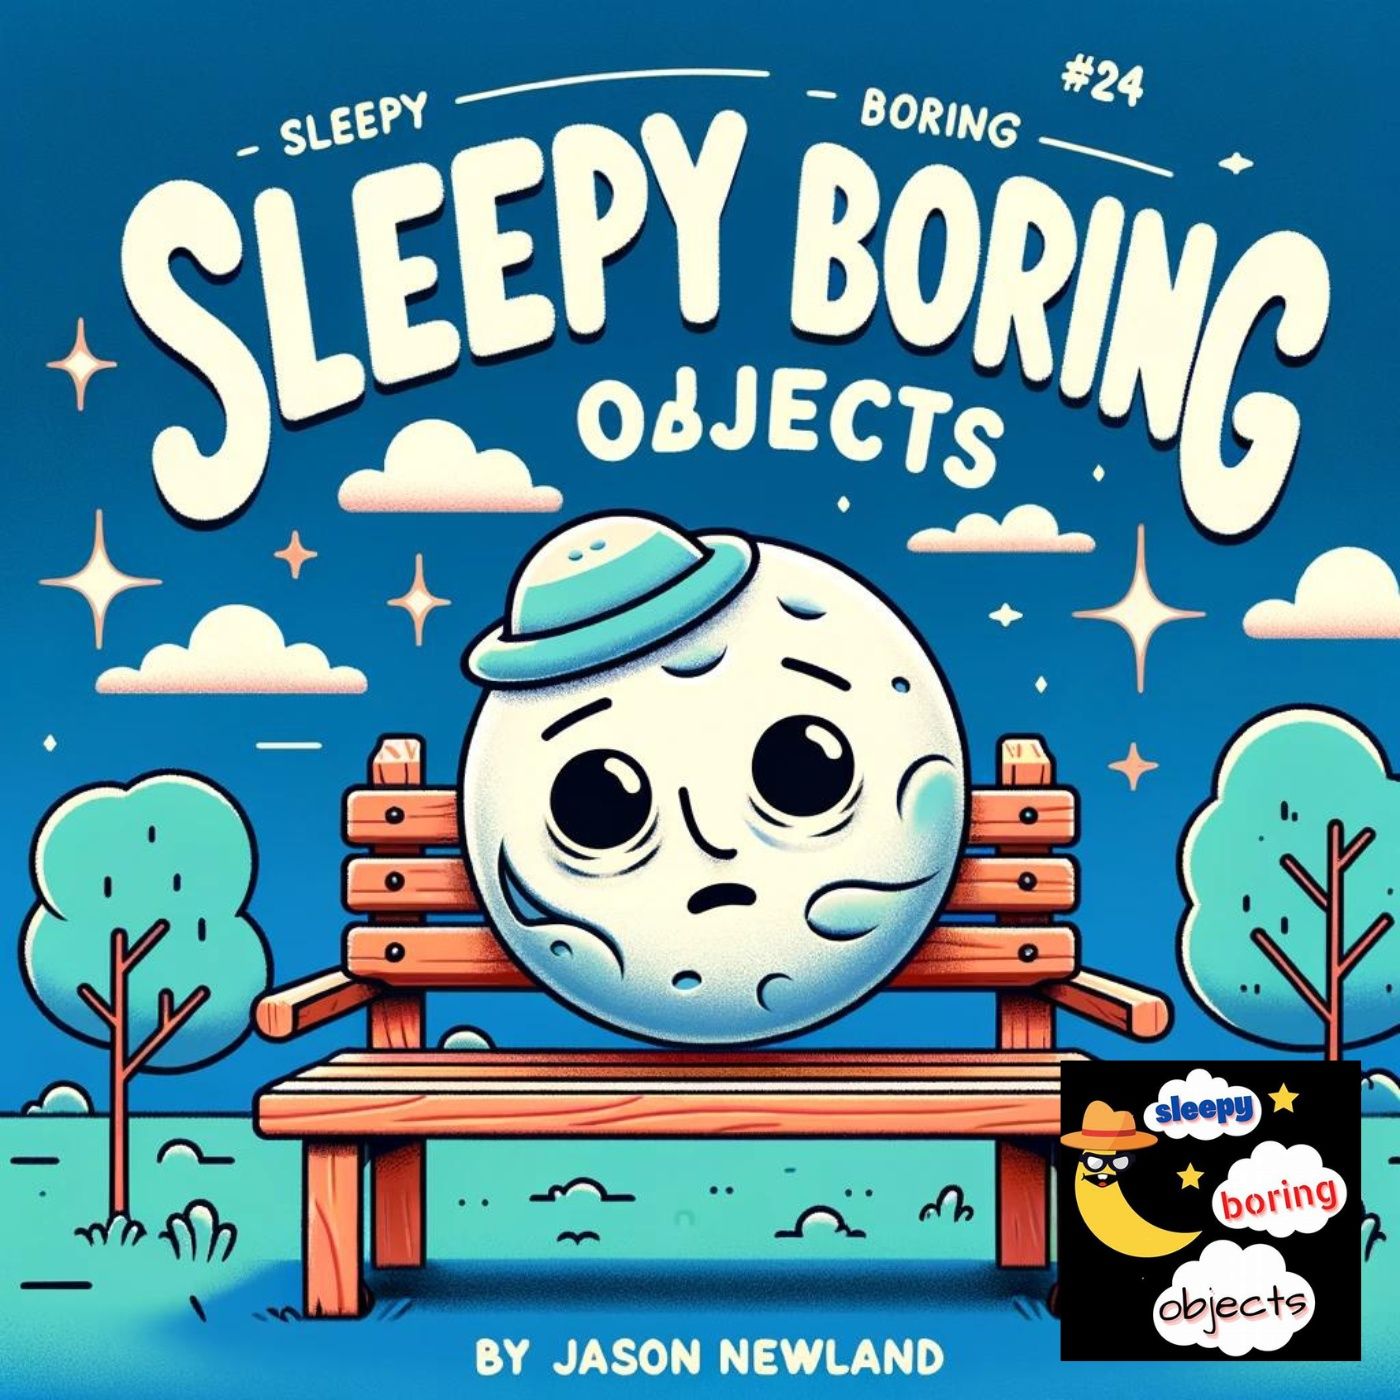 #24 “Wooden benches” SLEEPY Boring Objects (Jason Newland) (23rd November 2021)